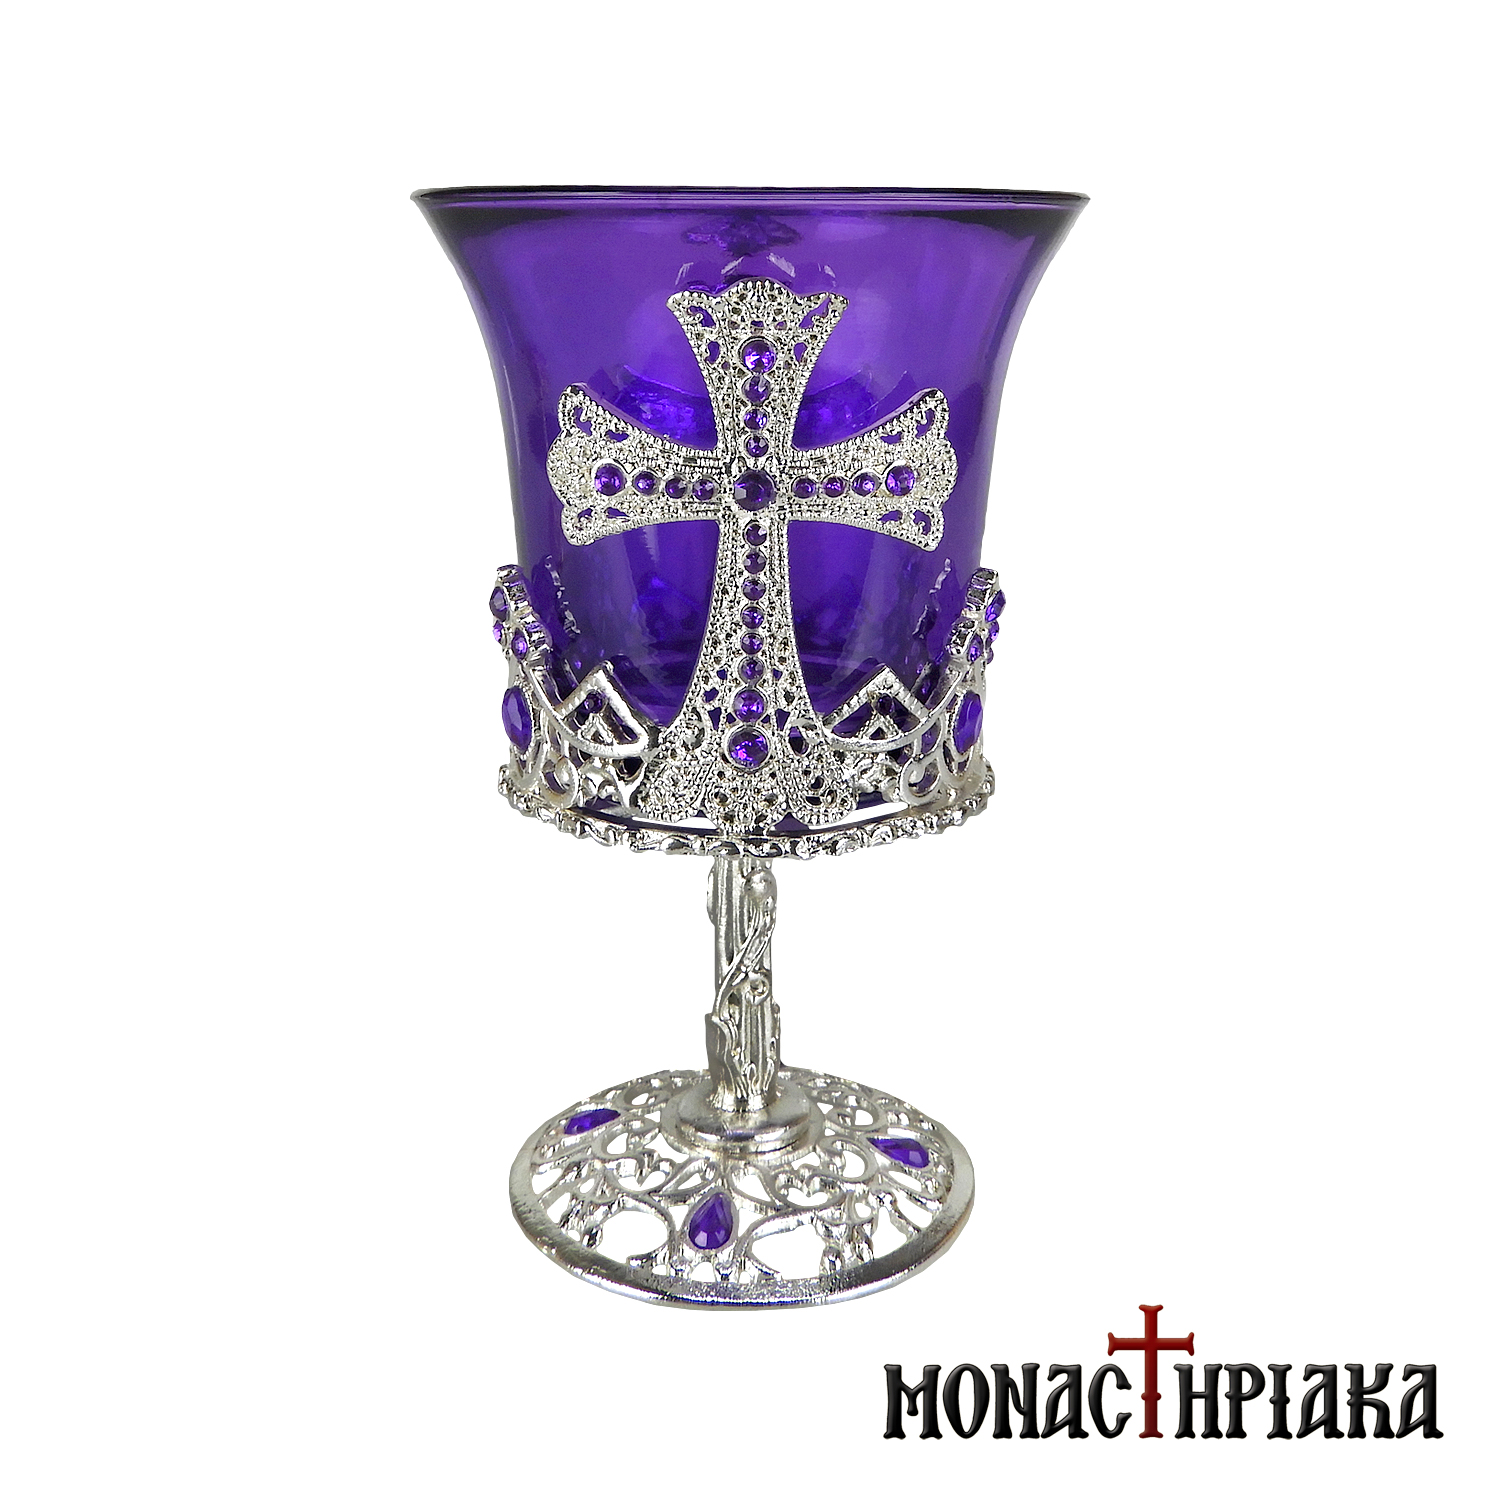 Orthodox Romanian Vigil Lamp Standing Cross Carvings Yellow Glass Ikonenampel 